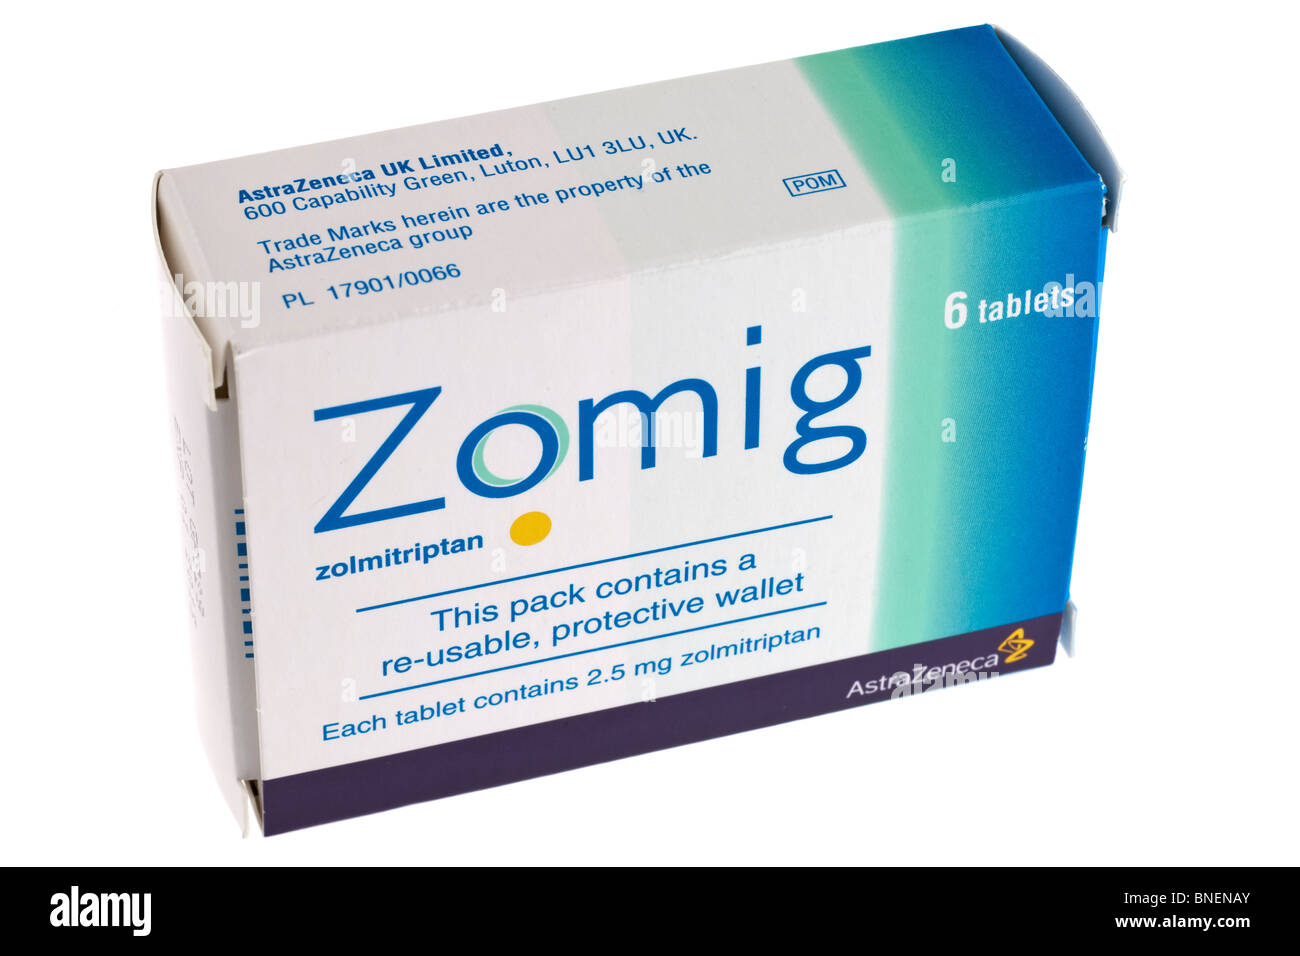 Box of Zomig 6 tablets with Zolmitriptan Stock Photo - Alamy